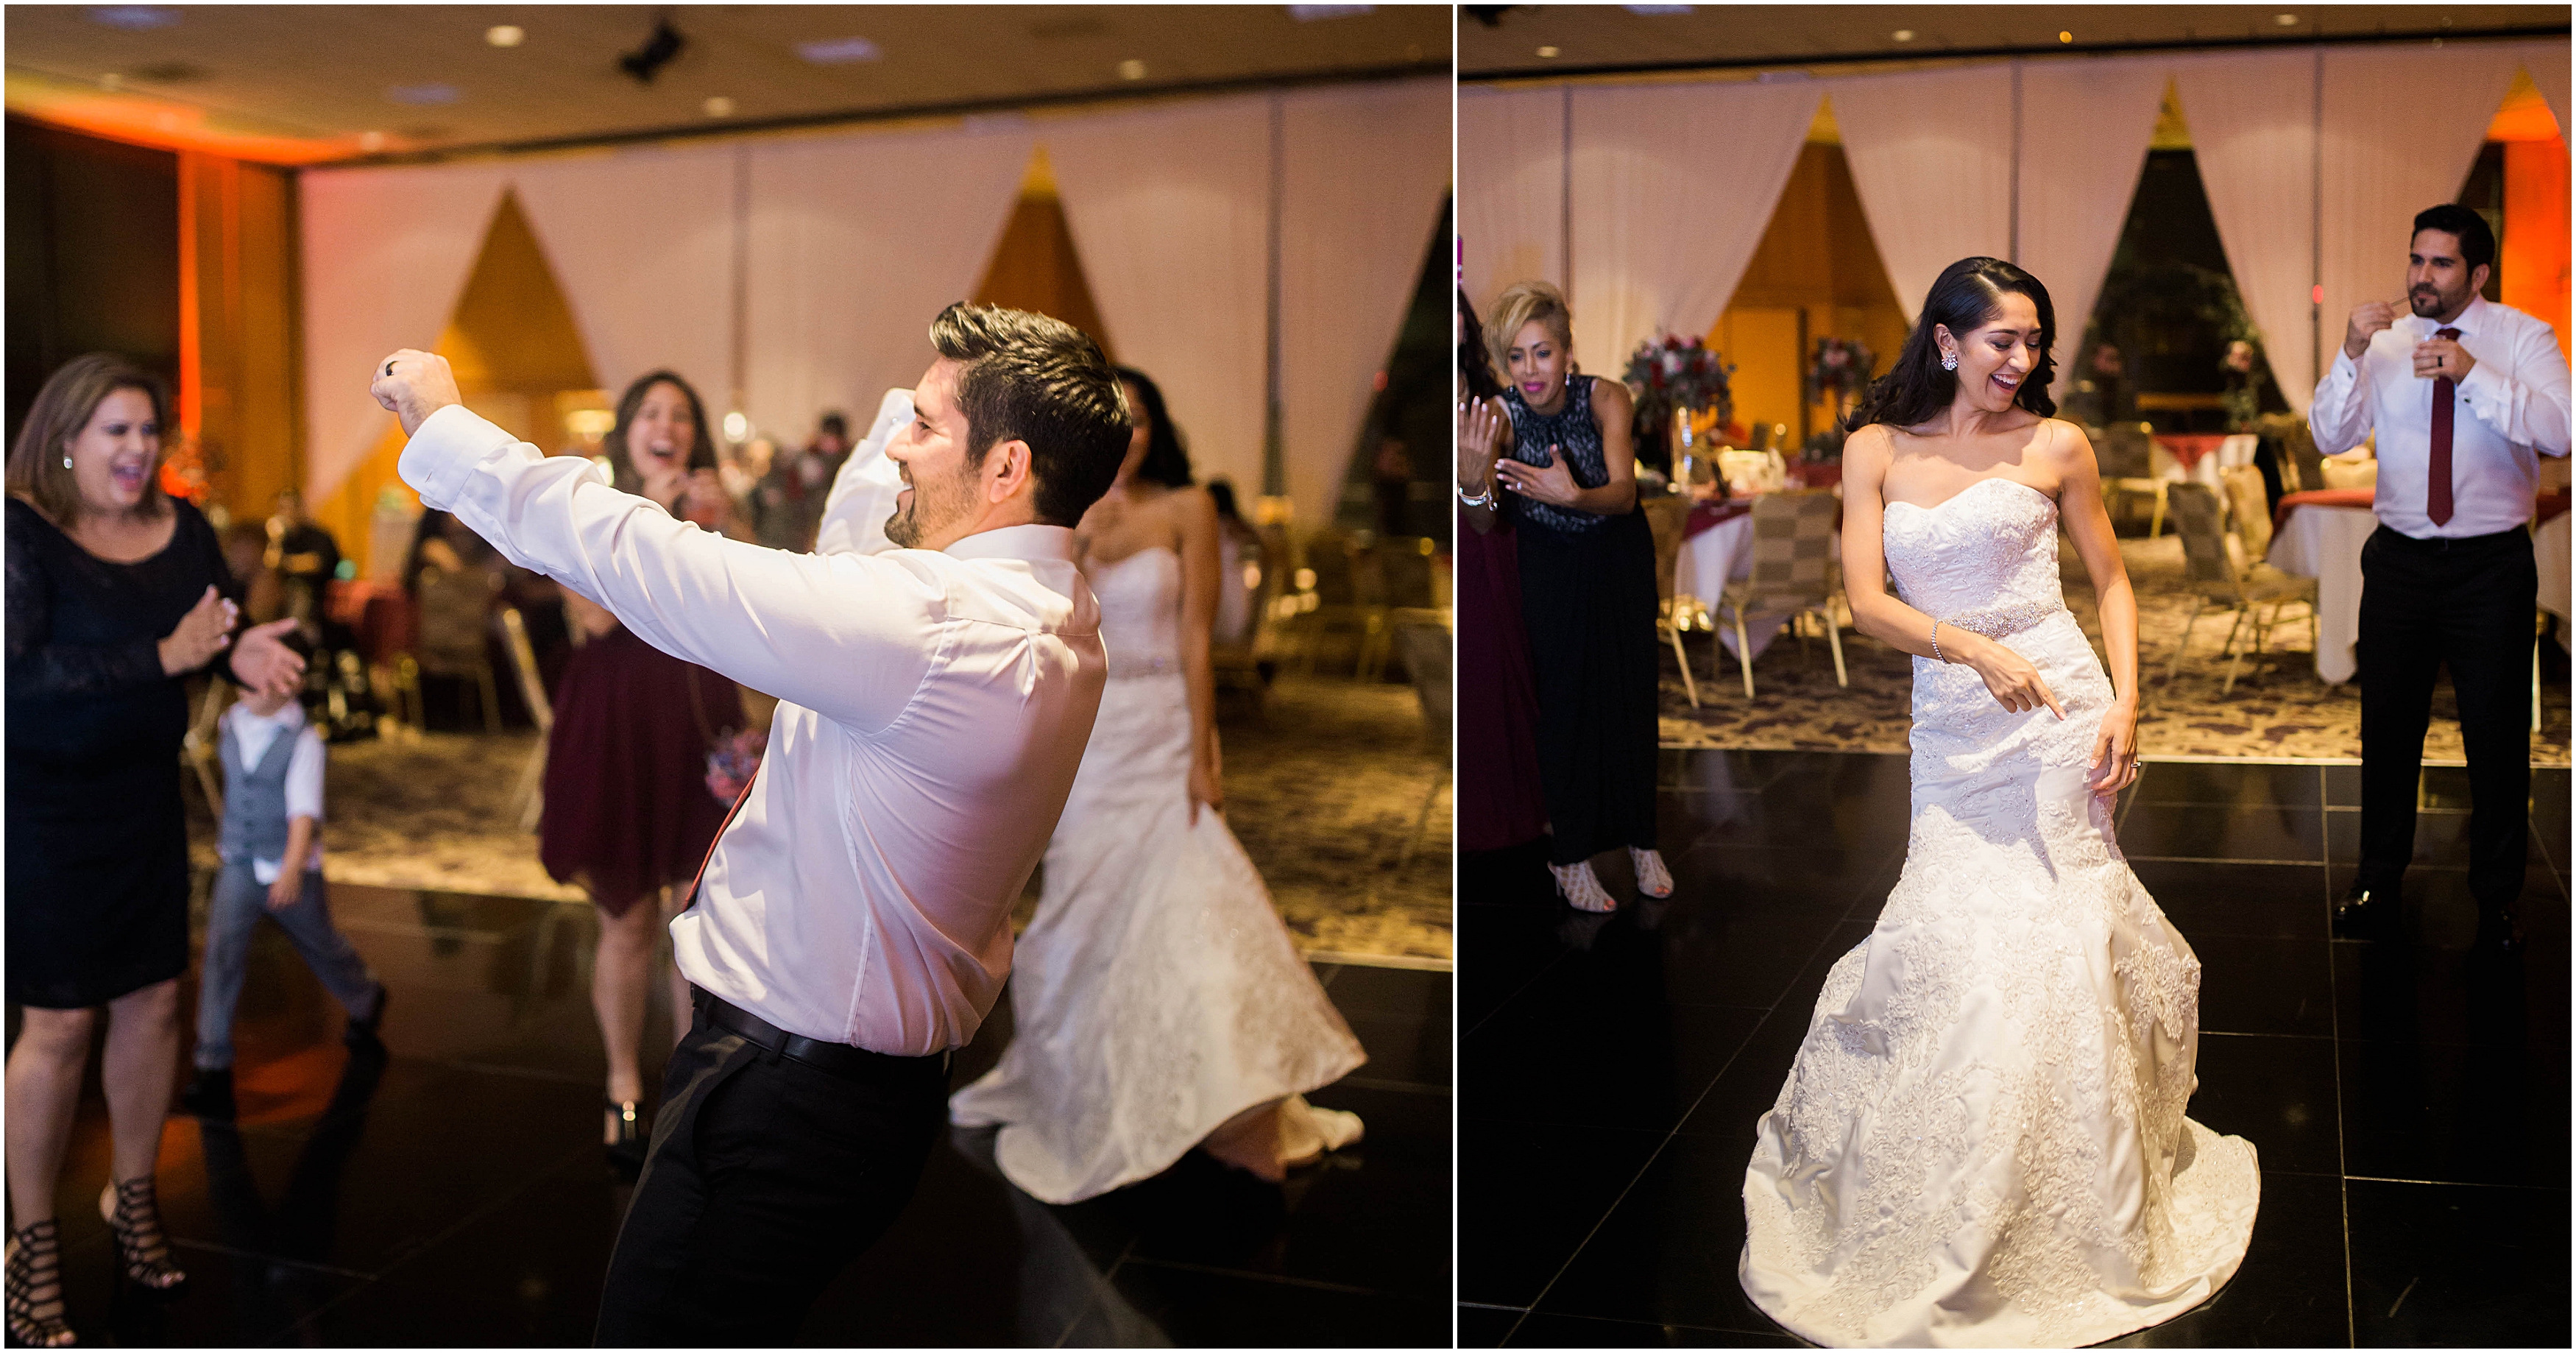 dancing bride and groom tgis catering